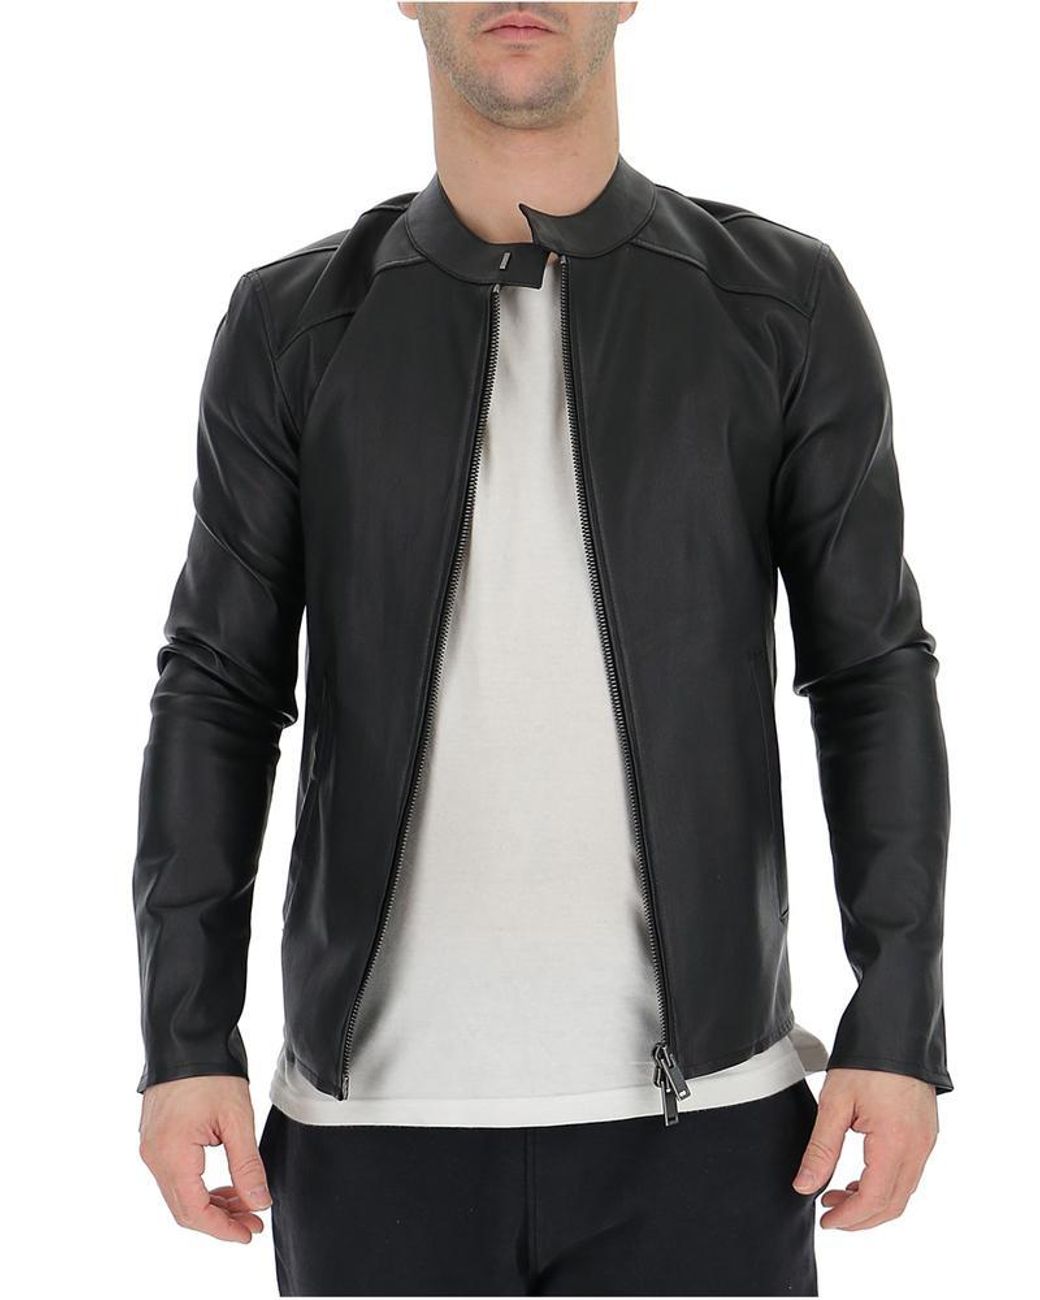 DESA NINETEENSEVENTYTWO Zipped Leather Jacket in Black for Men - Lyst